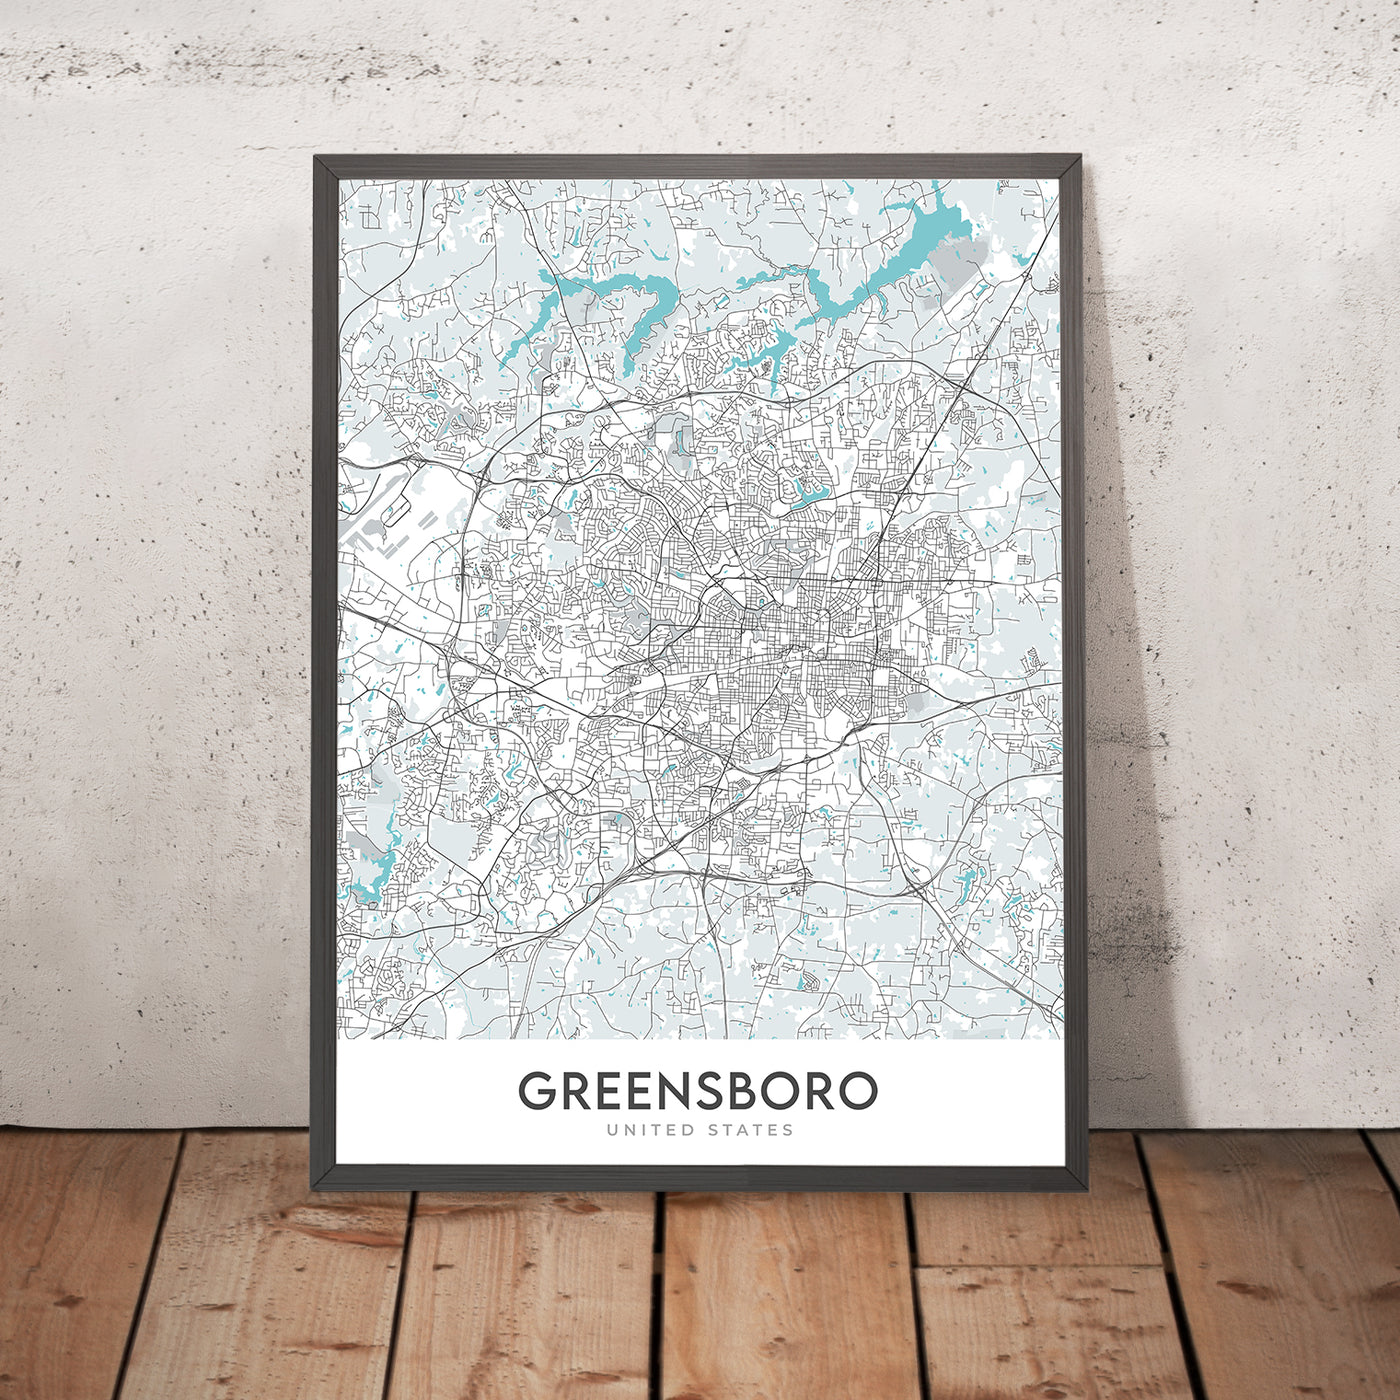 Modern City Map of Greensboro, NC: Downtown, Coliseum, University, I-40, I-85